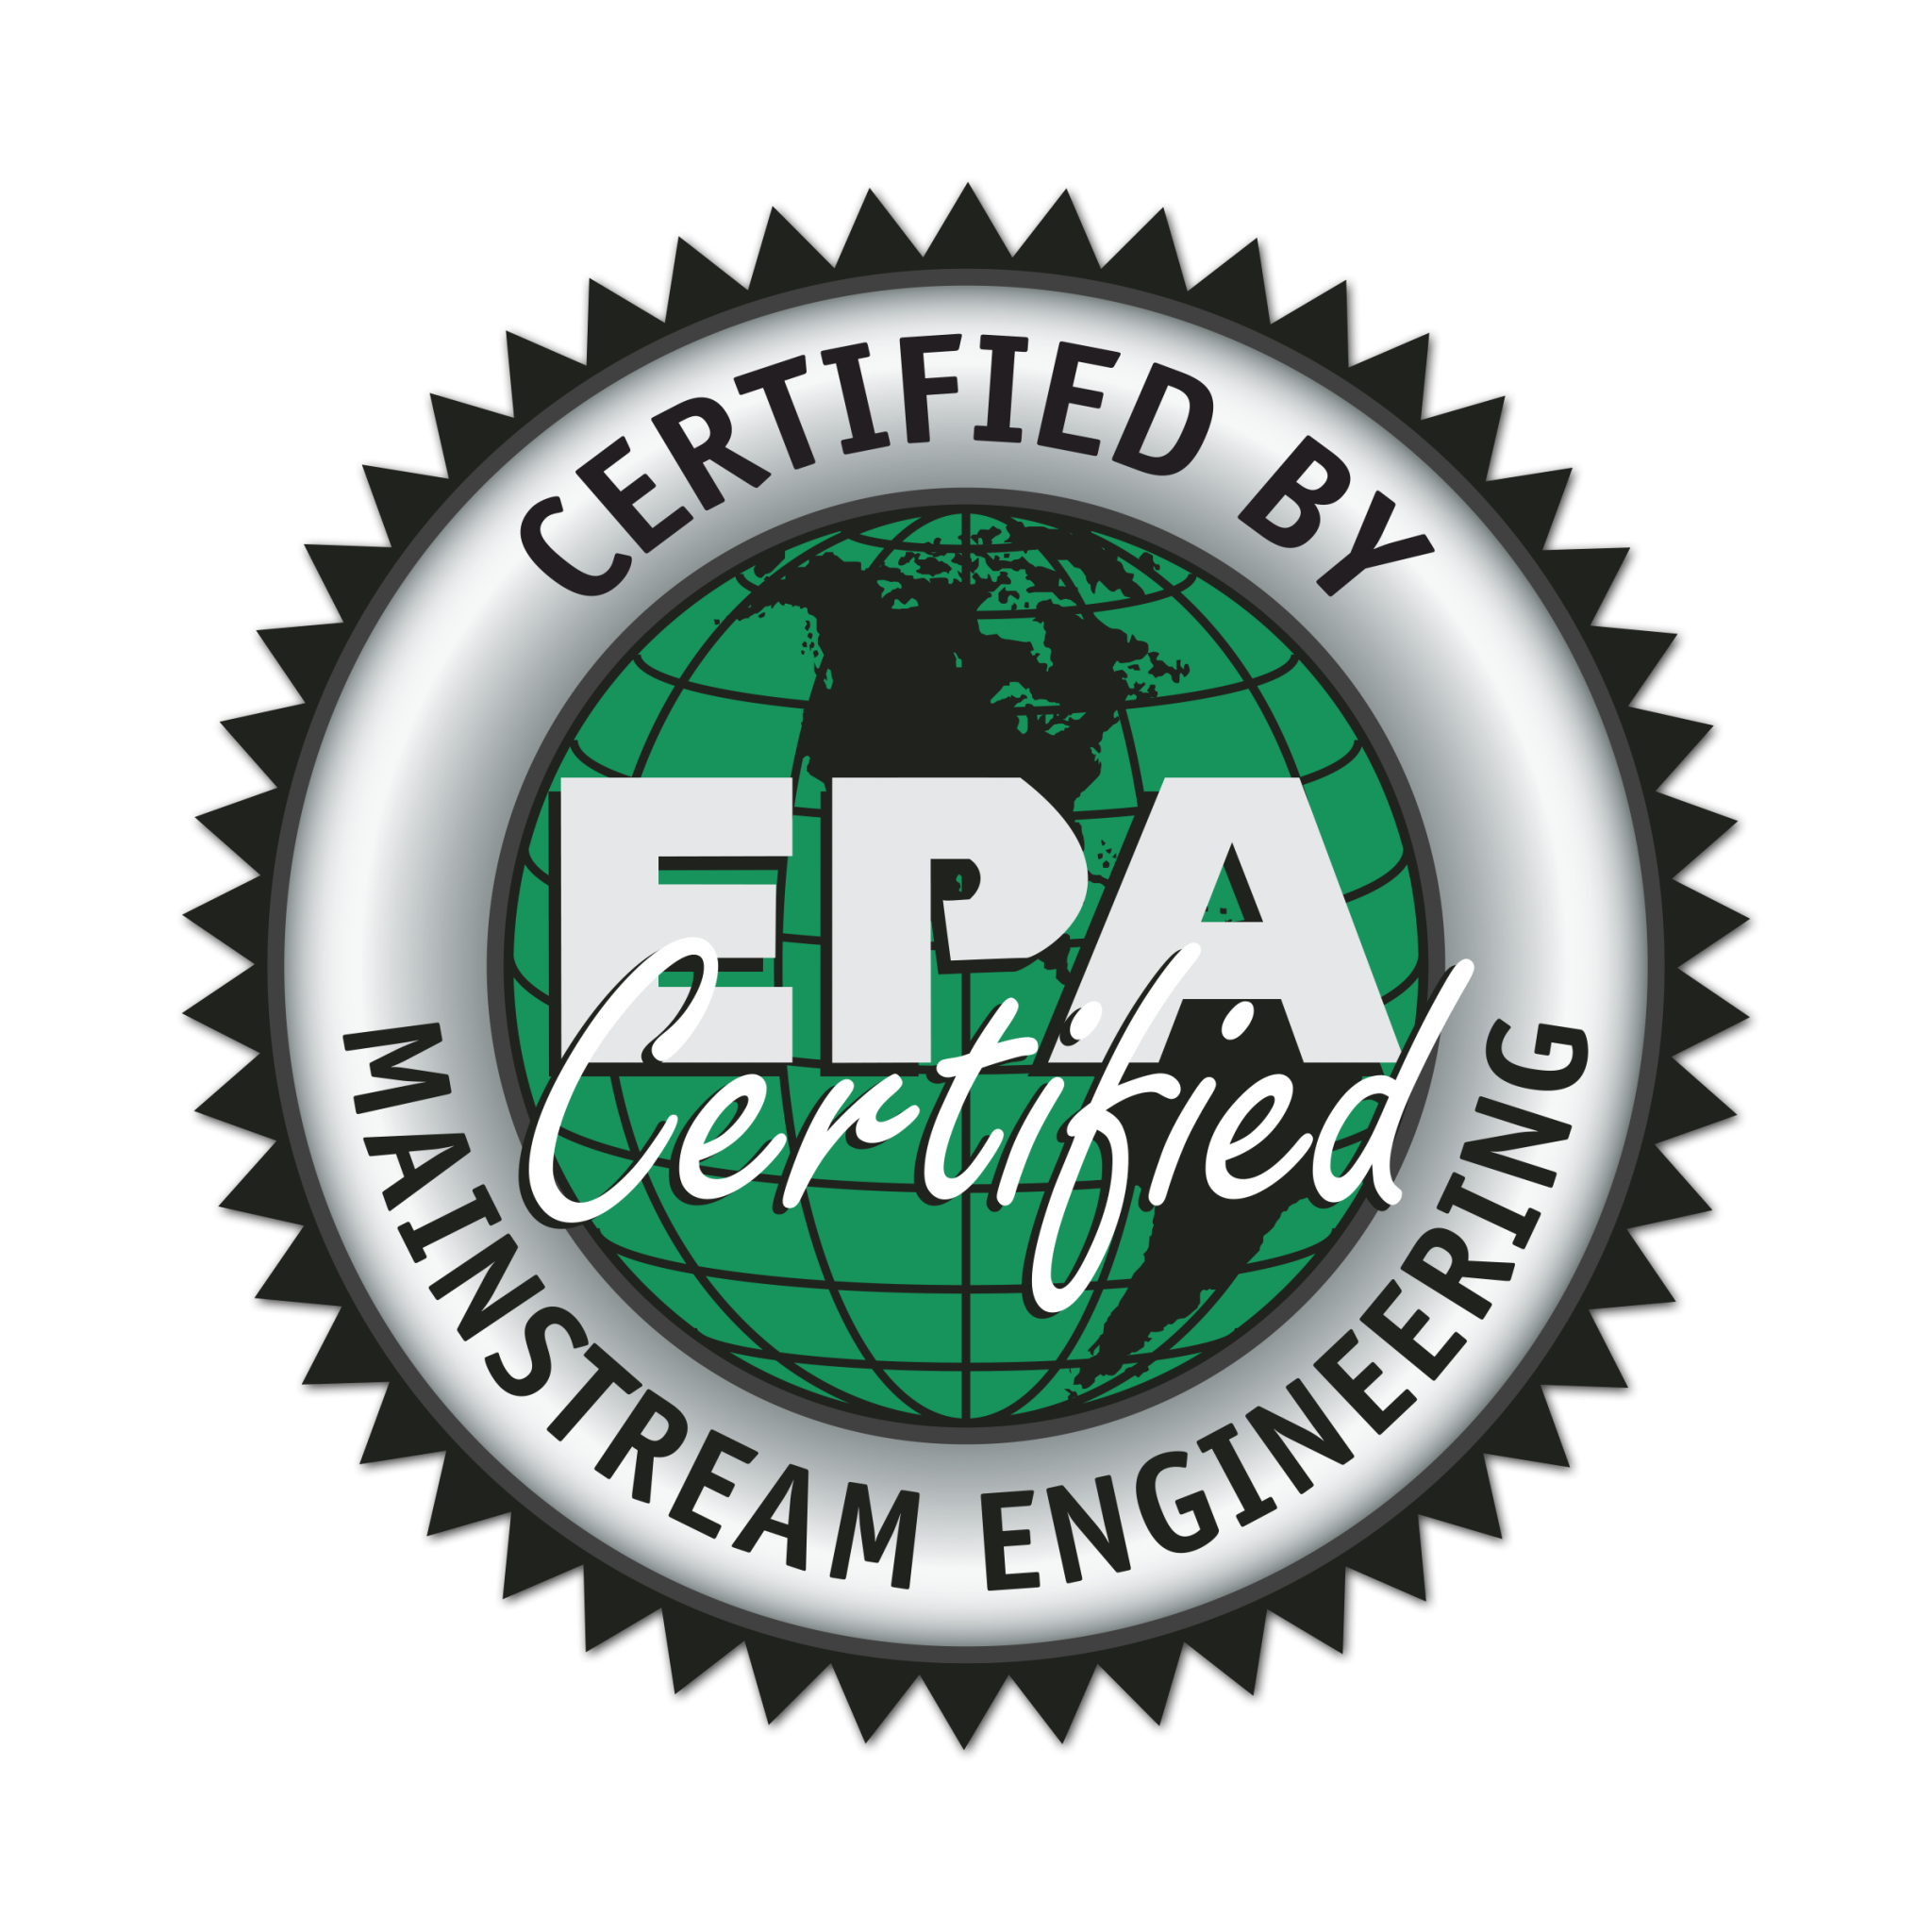 EPA 609 MVAC Certification Get The Process Started Mainstream Eng